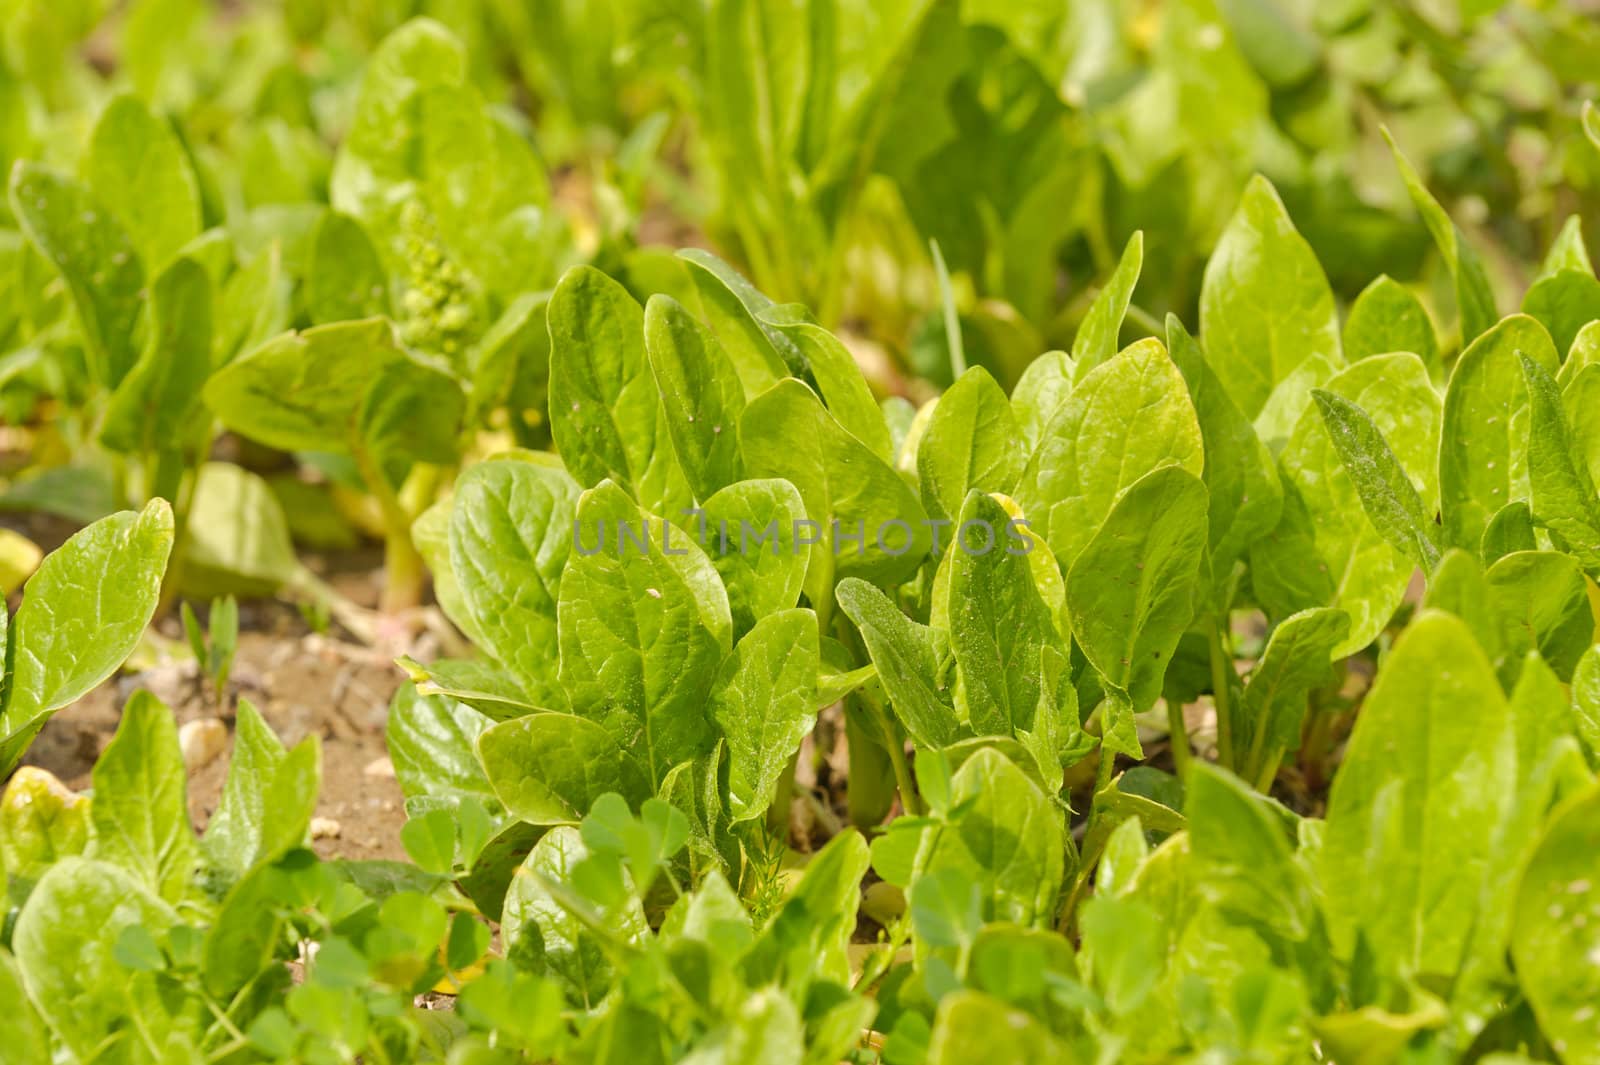 Arugula salad green plant in the garden by oguzdkn